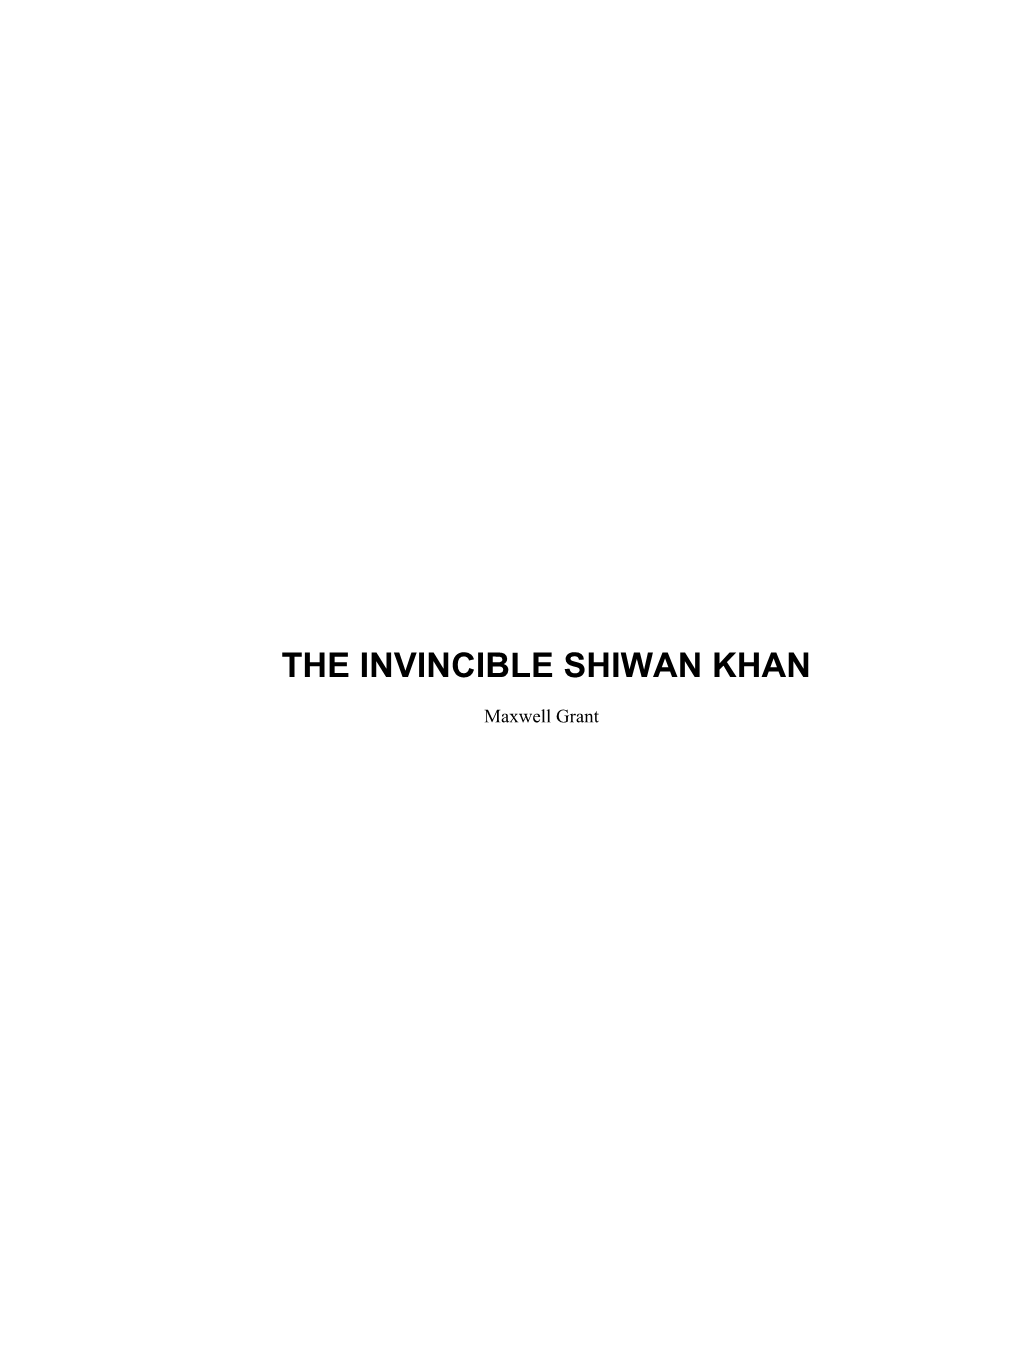 The Invincible Shiwan Khan